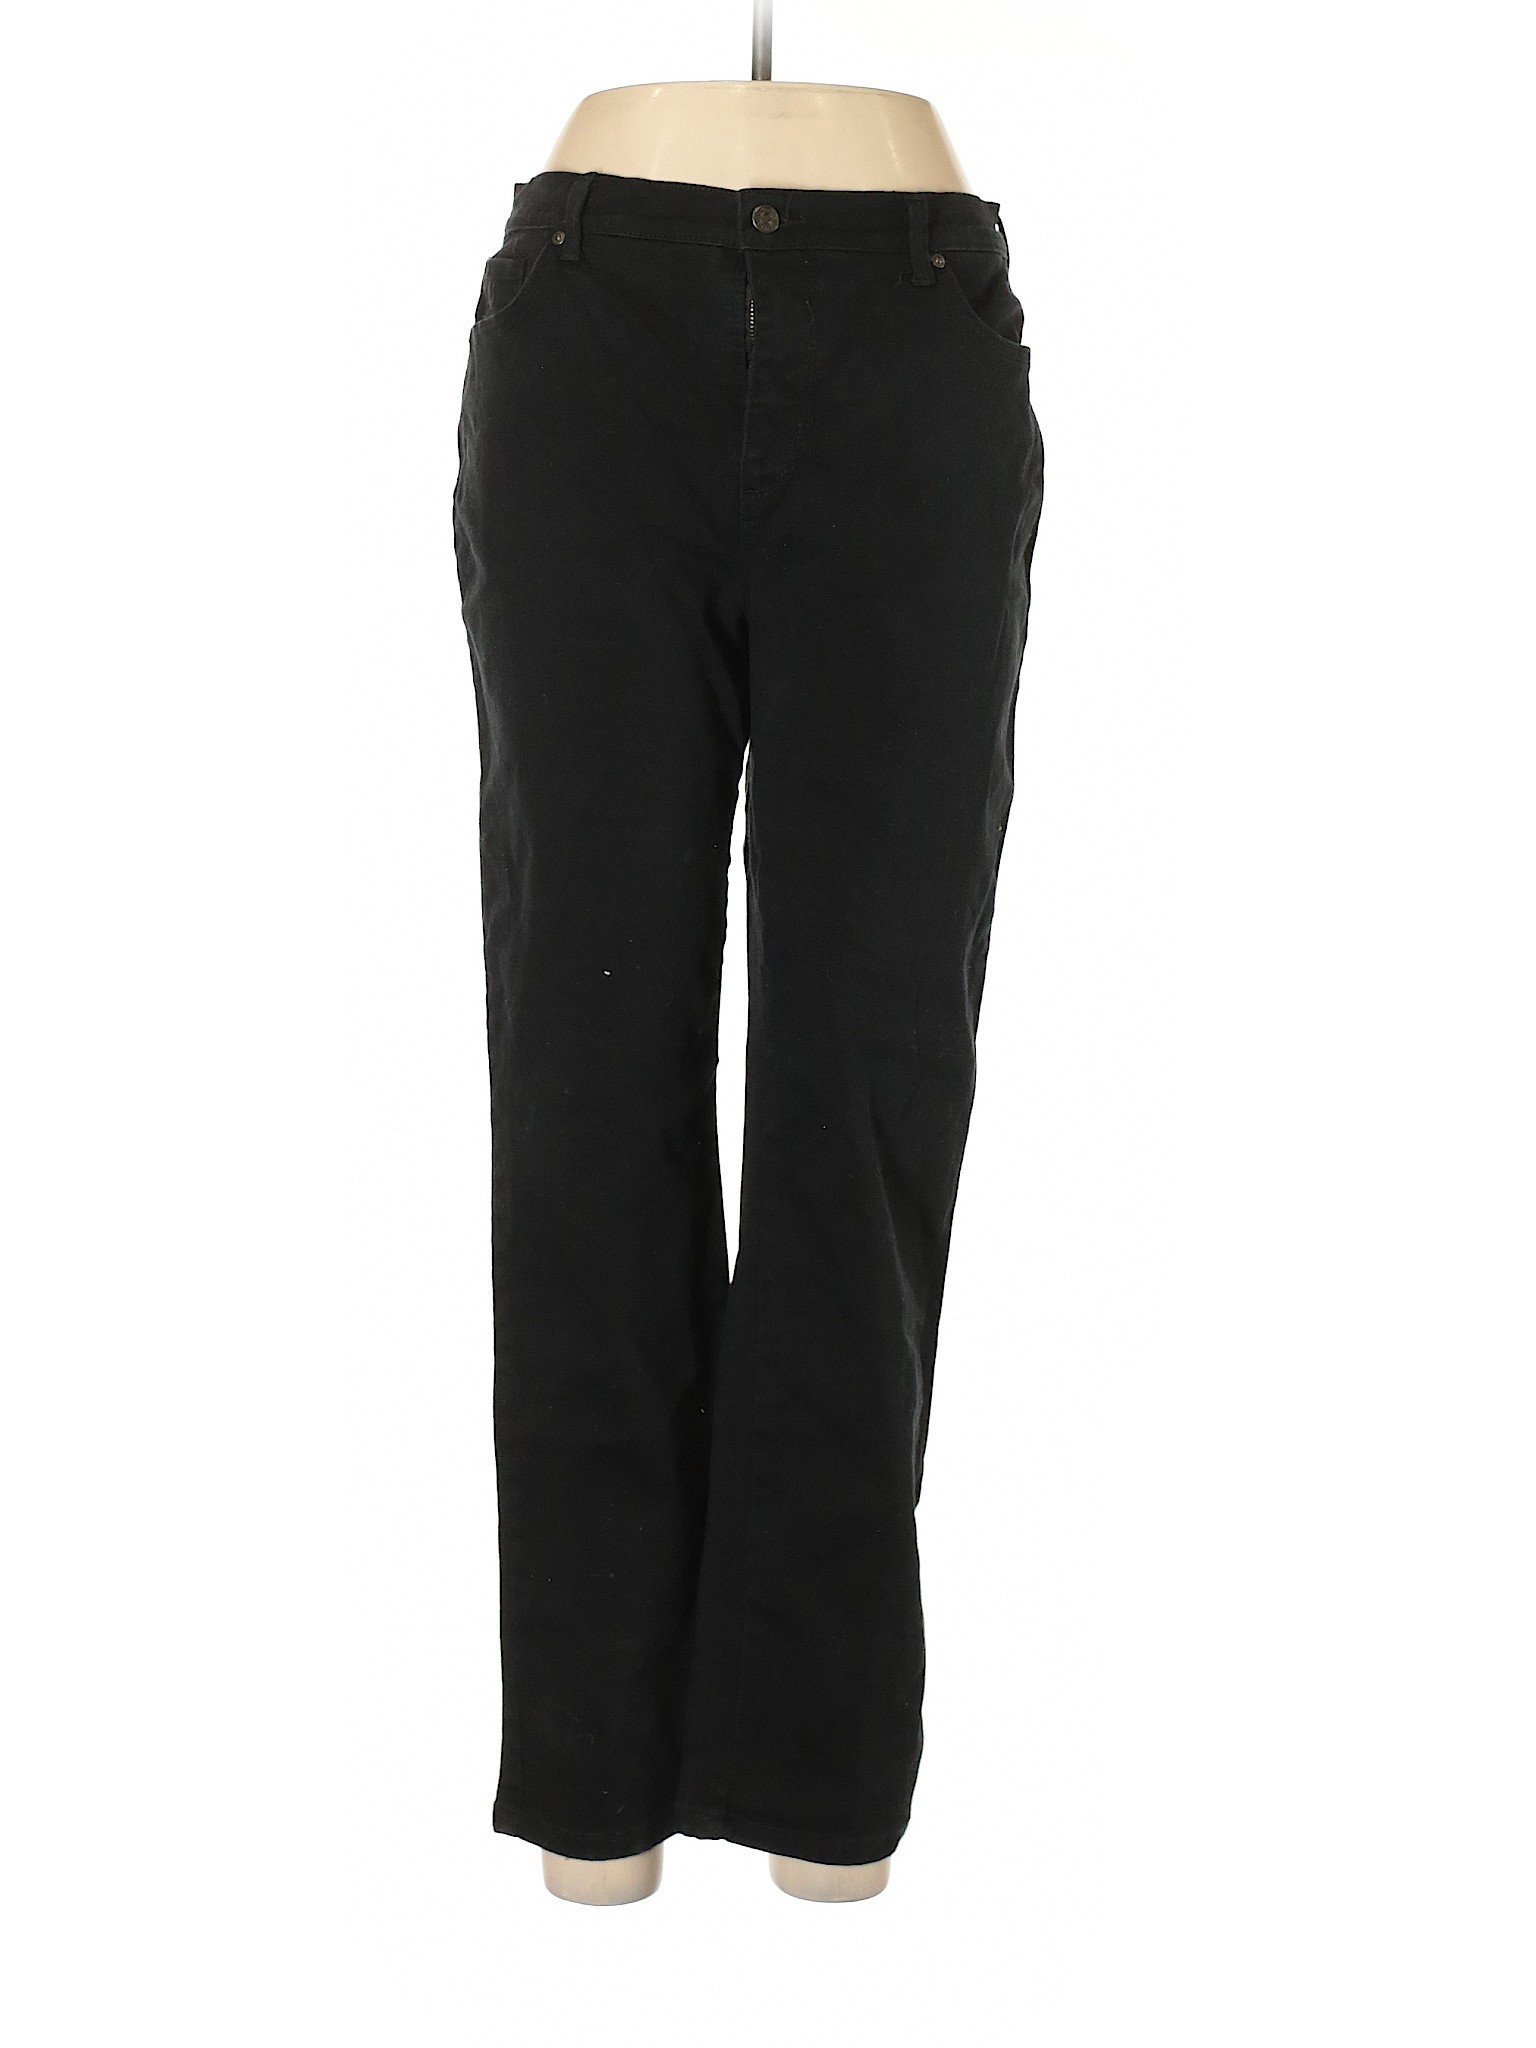 Gloria Vanderbilt Women Black Jeans 12 Petites | eBay